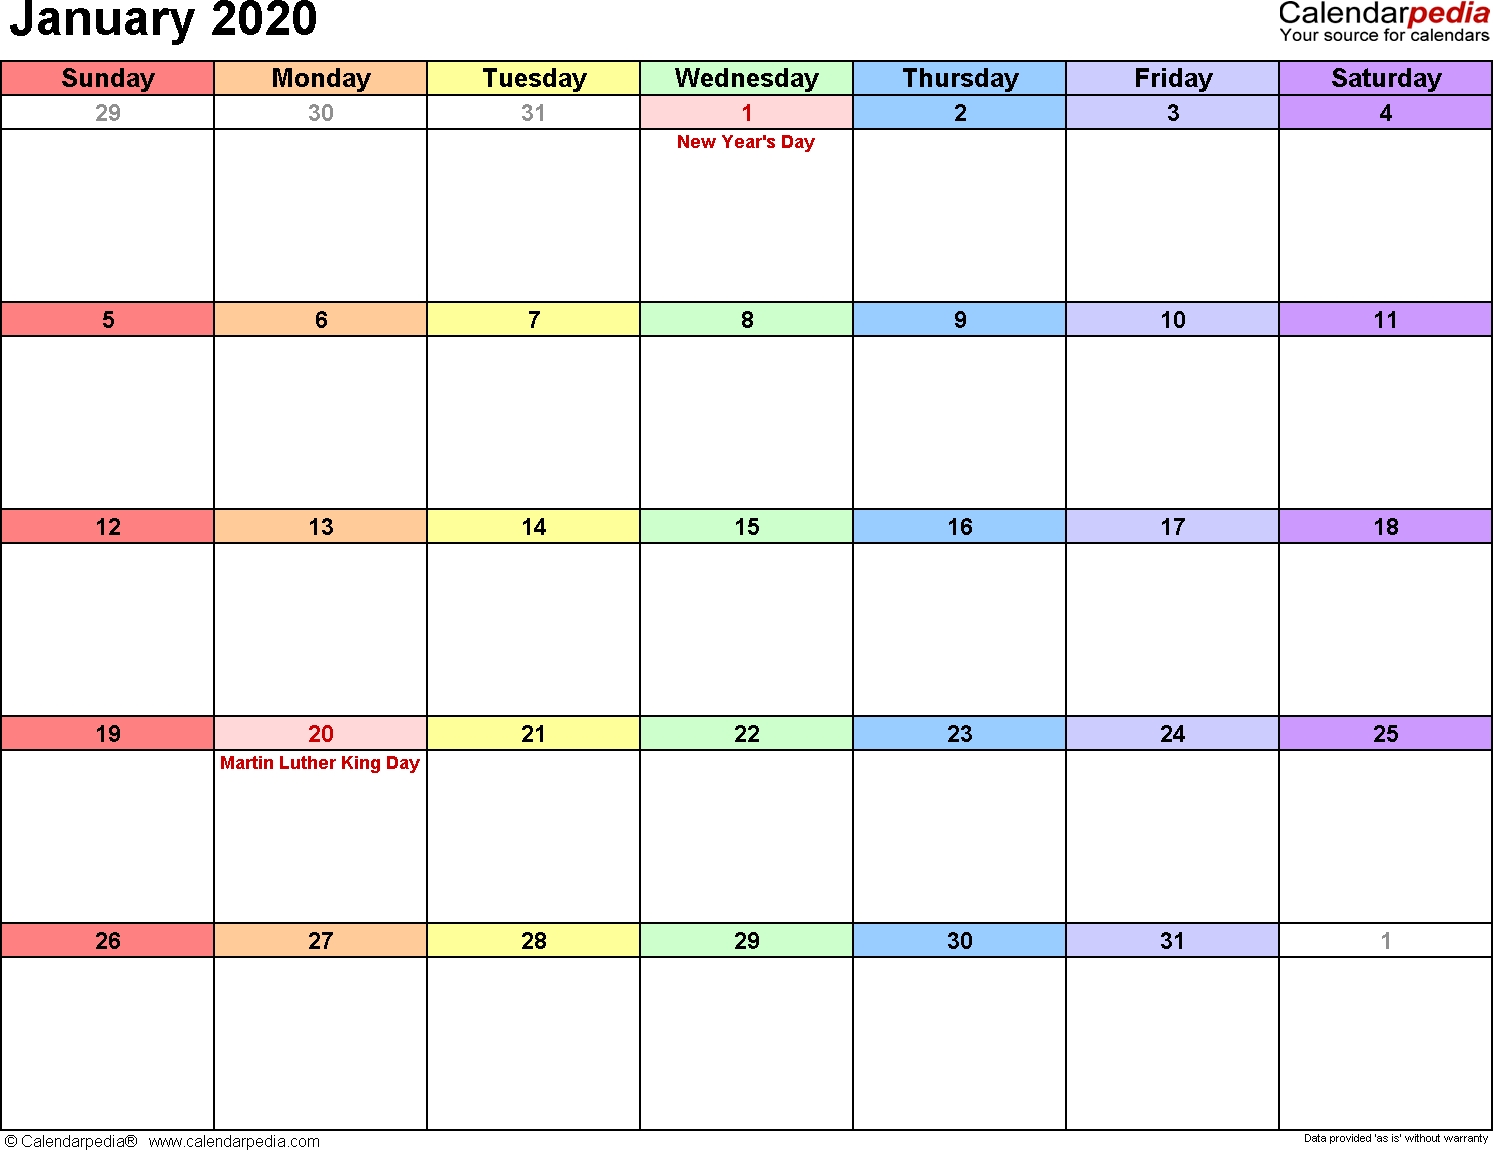 Calendarpedia - Your Source For Calendars Calendarpedia 2020 Printable South Africa